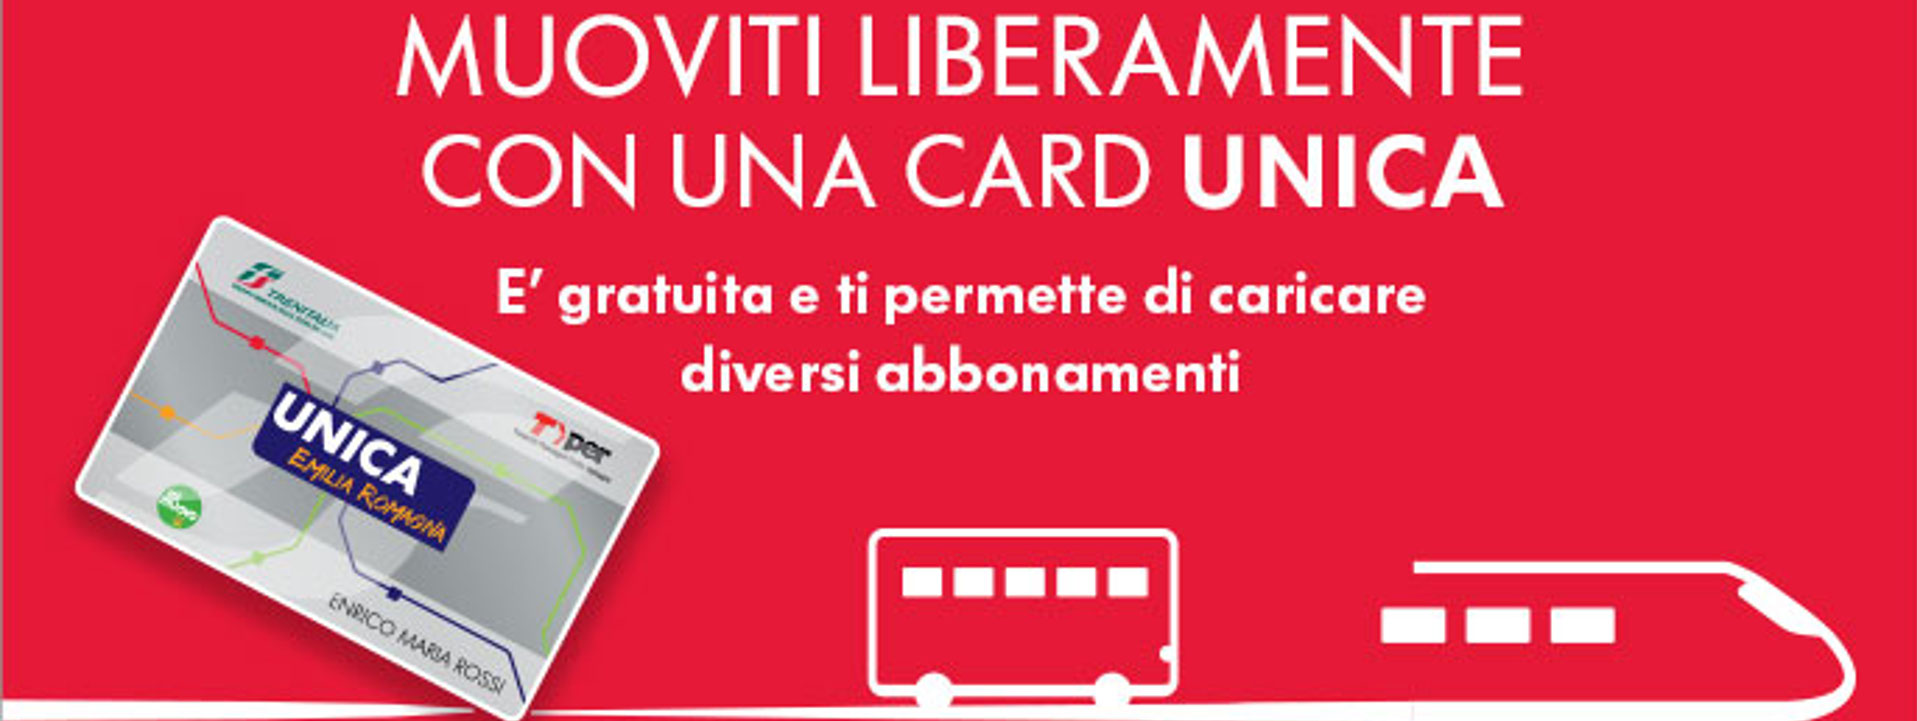 Immagine Card Unica Emilia Romagna 